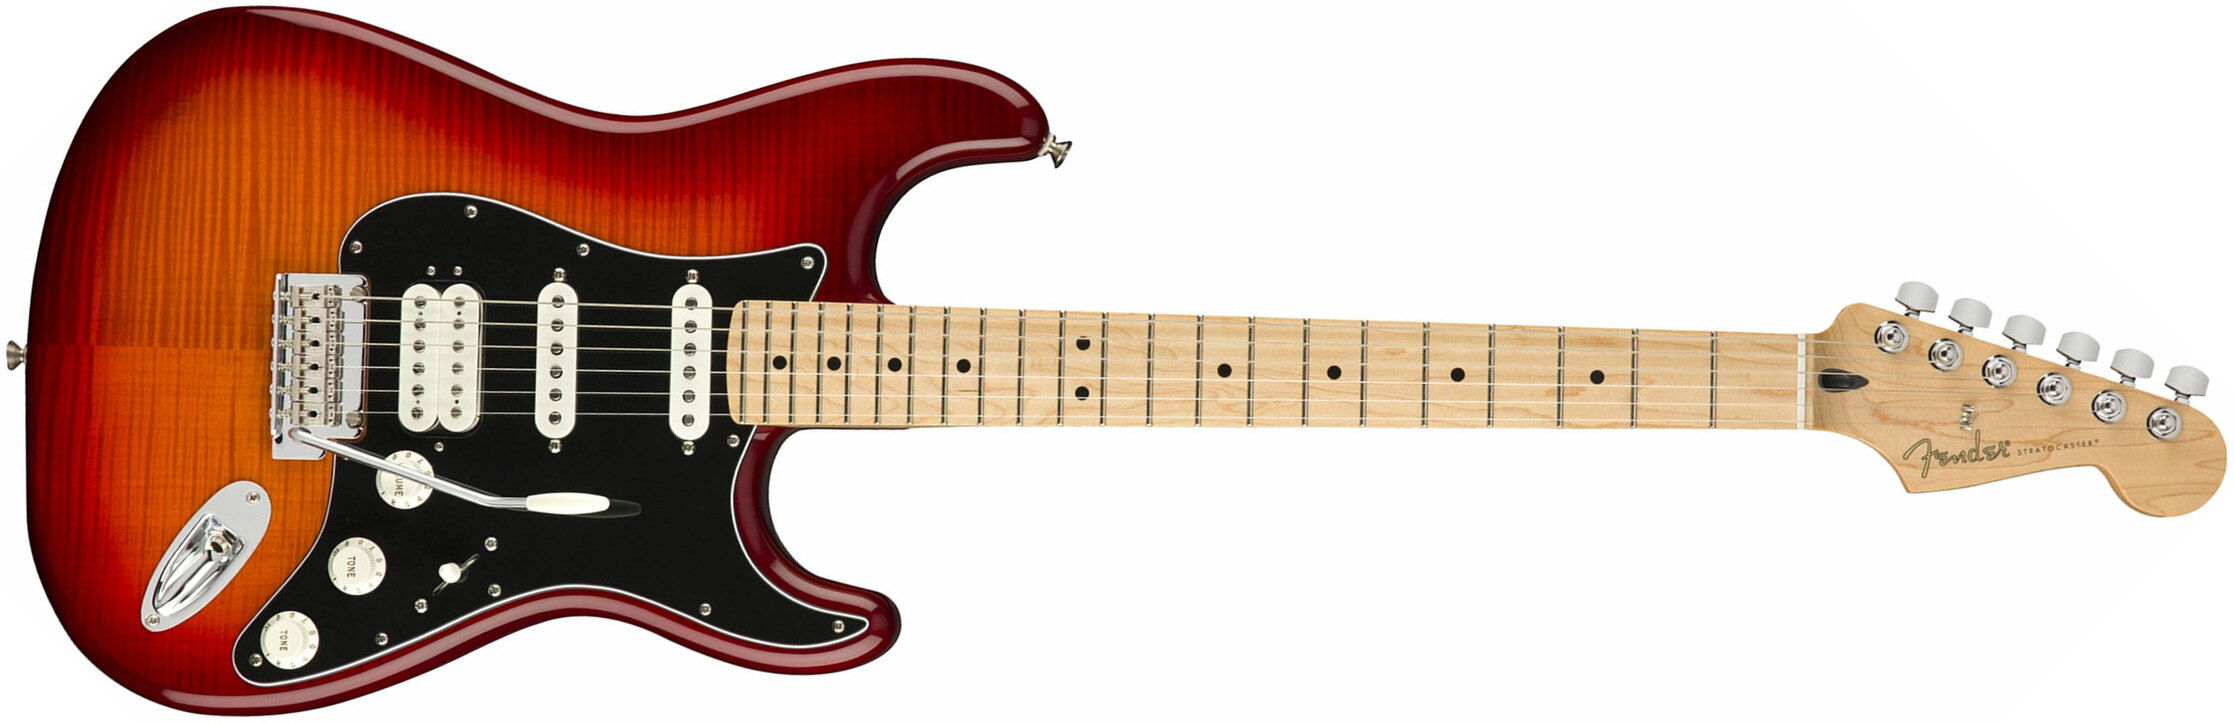 Fender Strat Player Plus Top Mex Hss Mn - Aged Cherry Burst - Guitarra eléctrica con forma de str. - Main picture